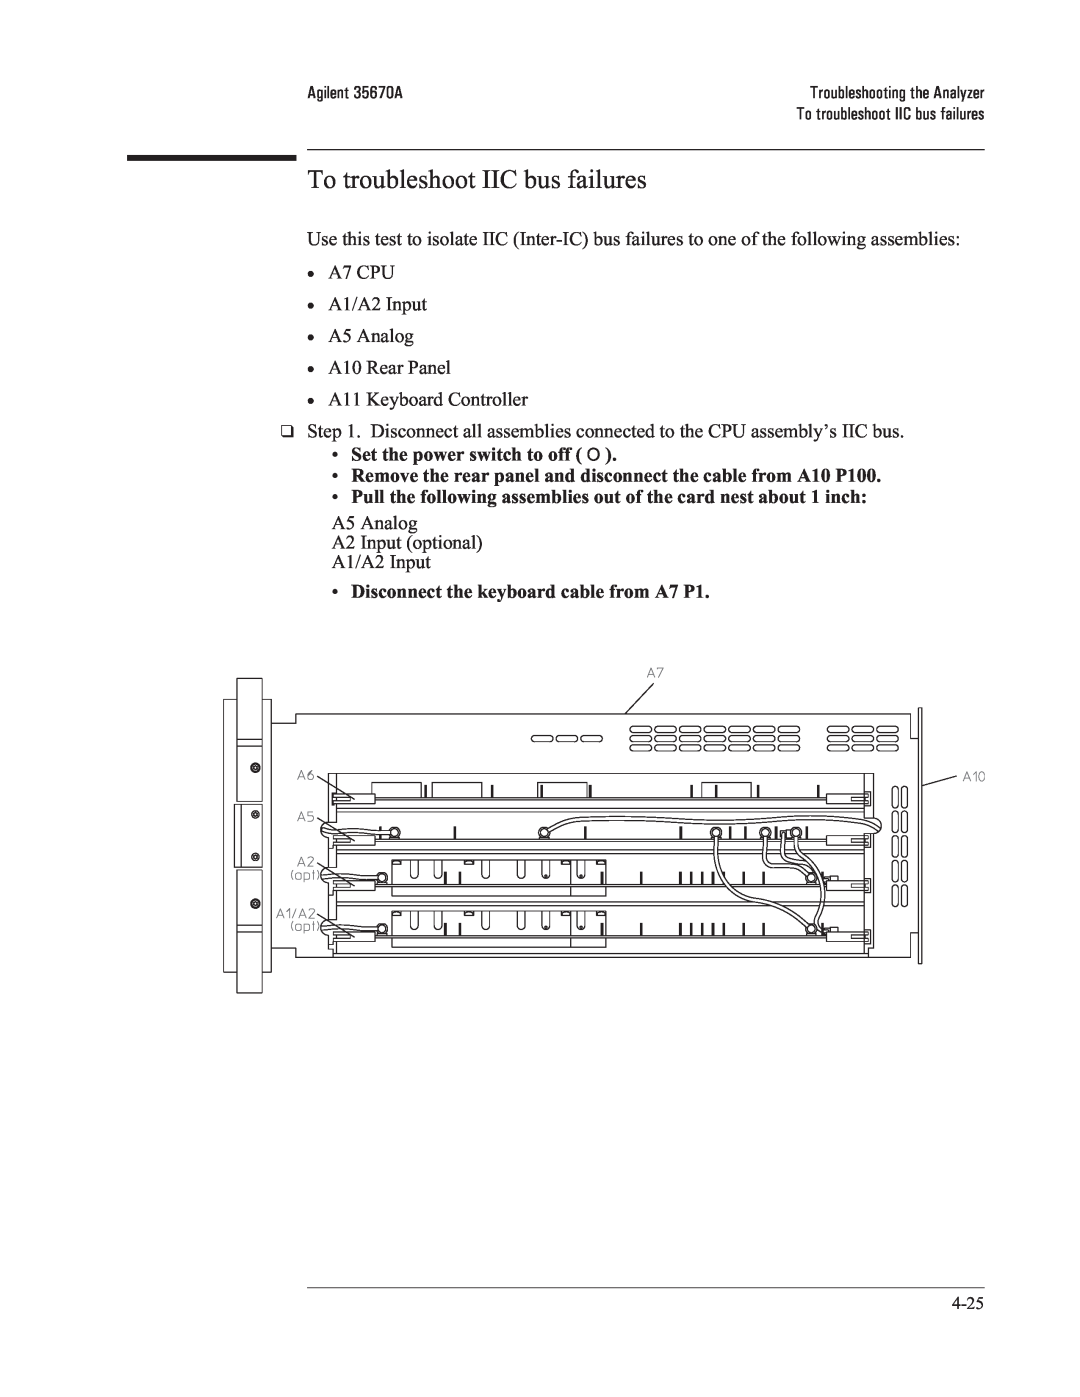 Agilent Technologies 35670-90066 manual To troubleshoot IIC bus failures 